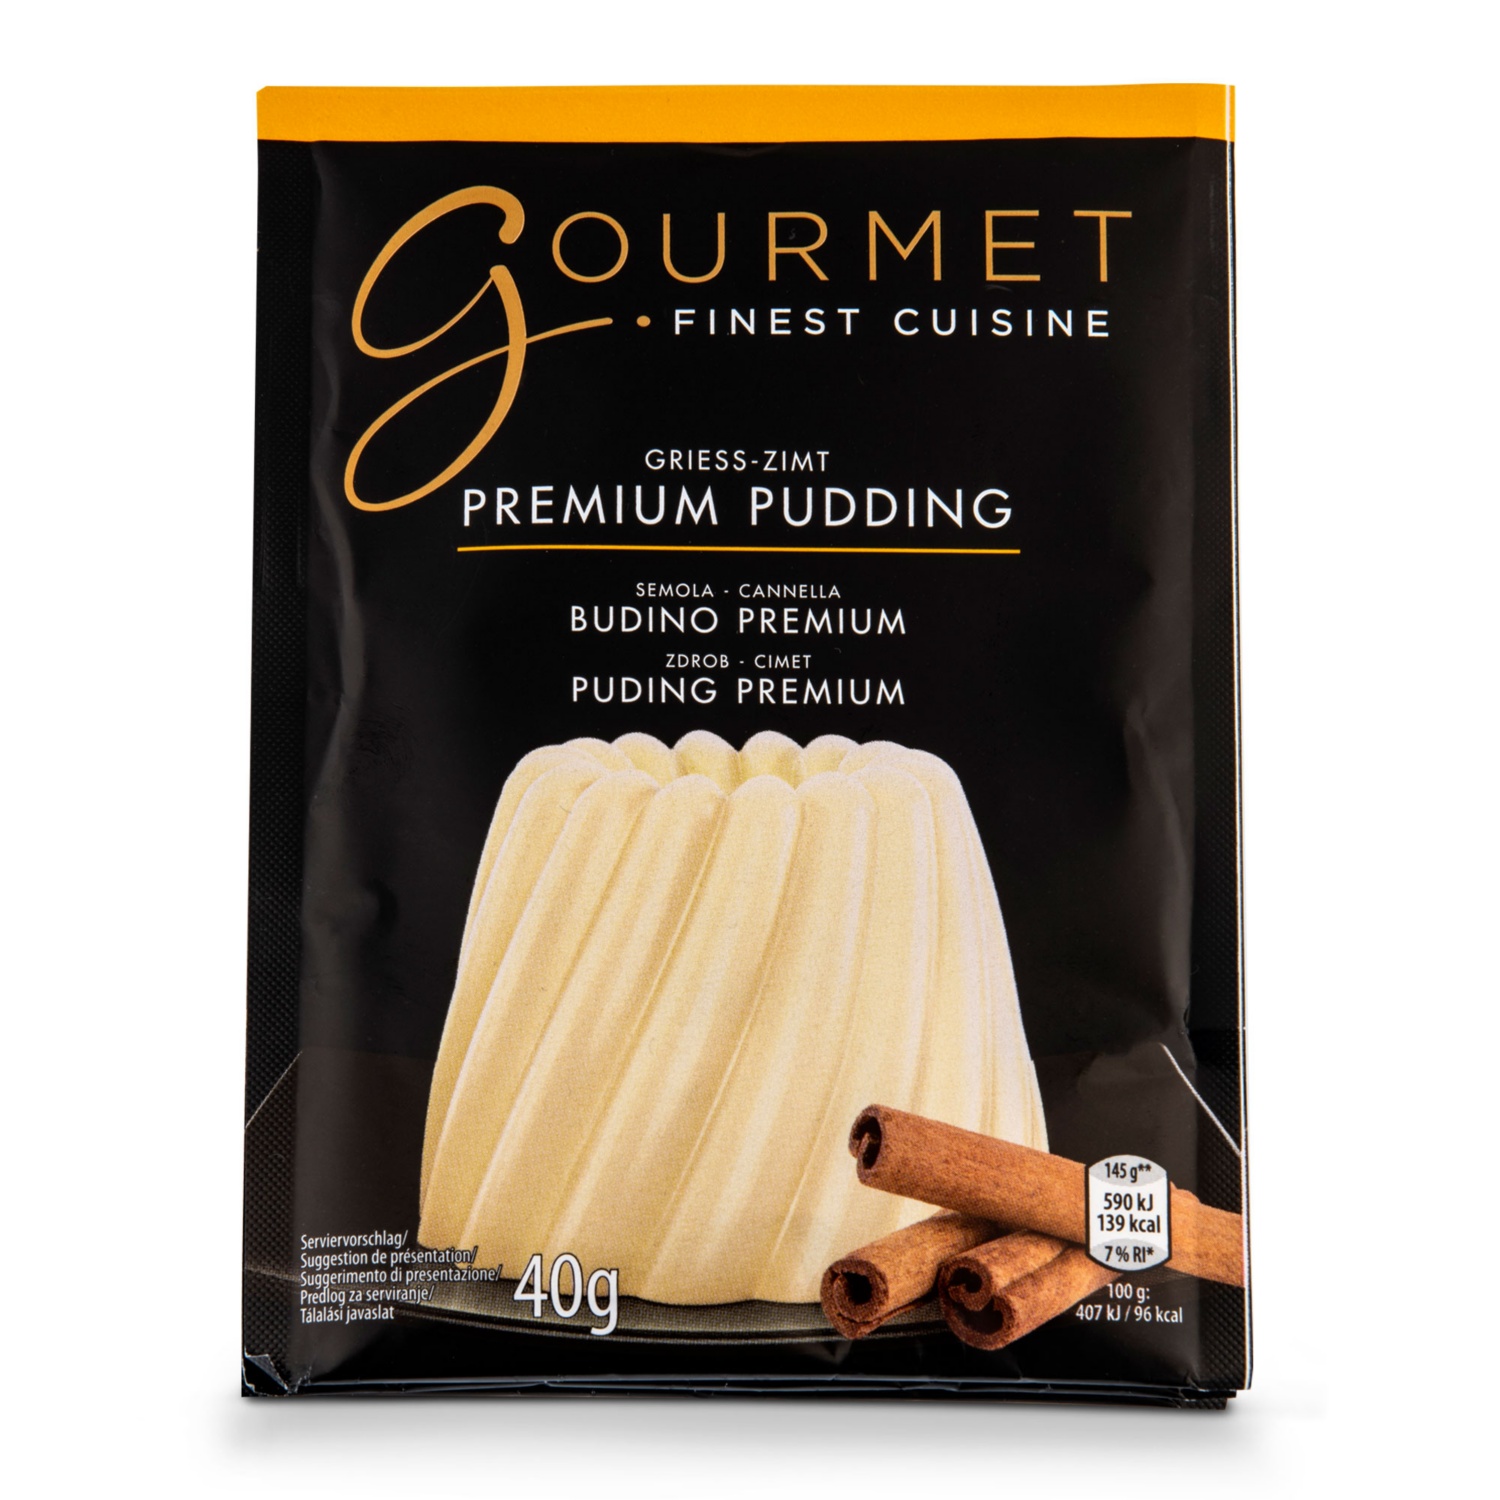 GOURMET Pudding, semoule-cannelle